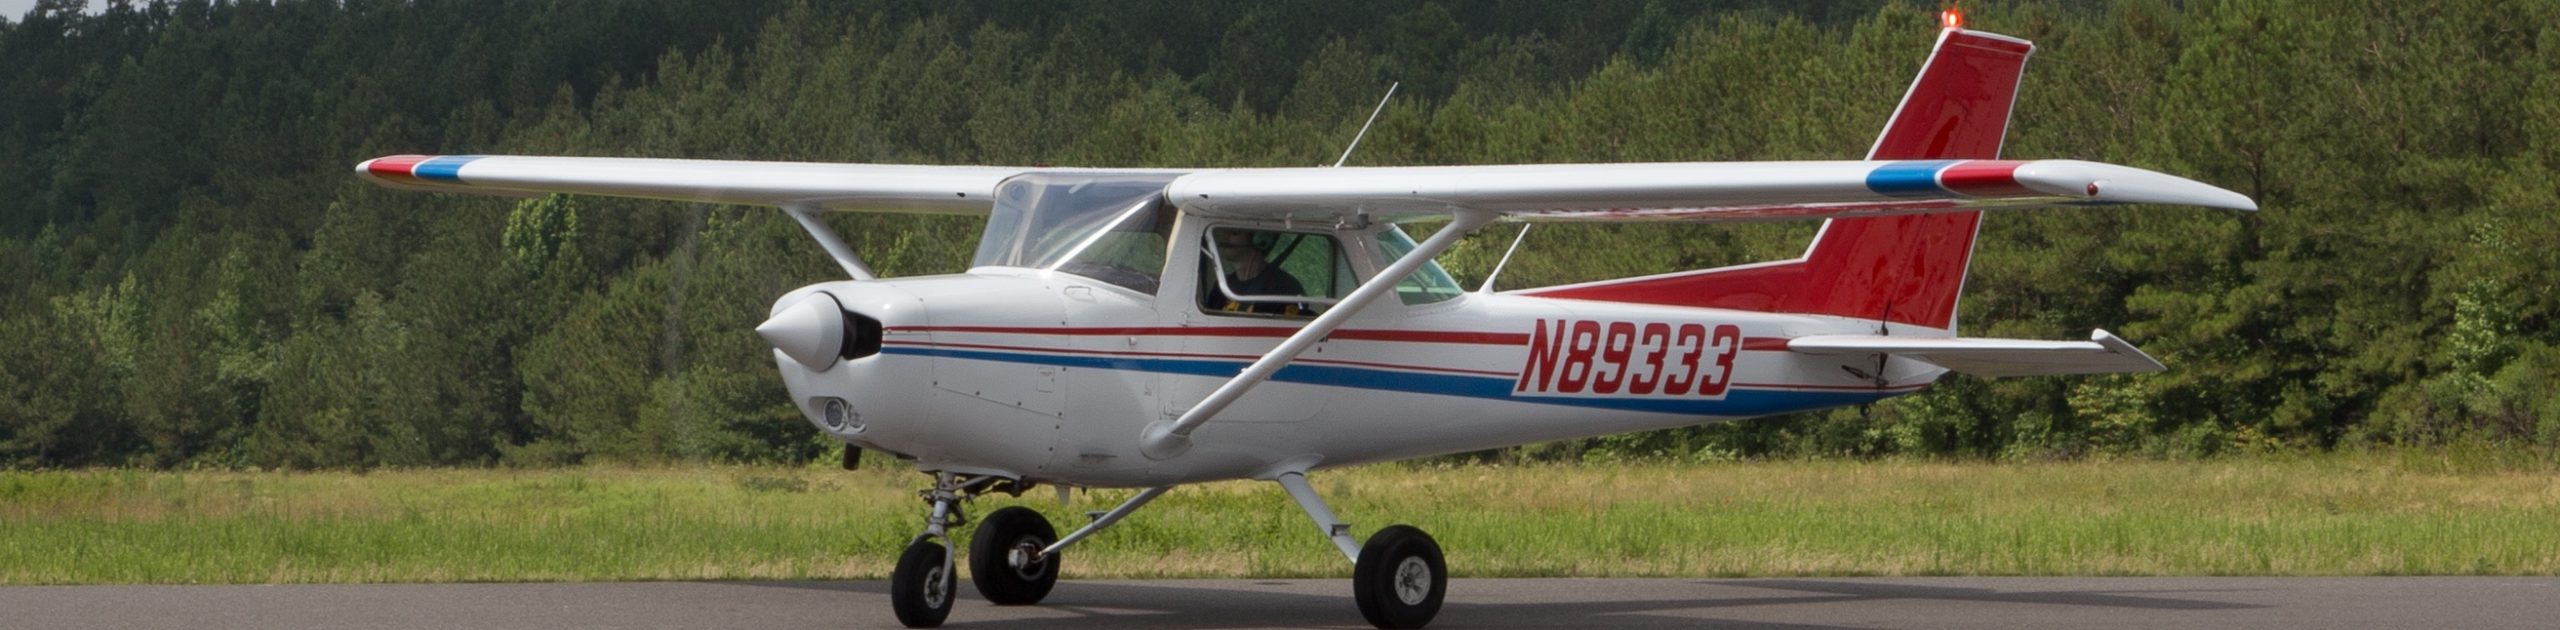 Wings of Carolina Flying Club, at Raleigh Executive Jetport @ Sanford-Lee County